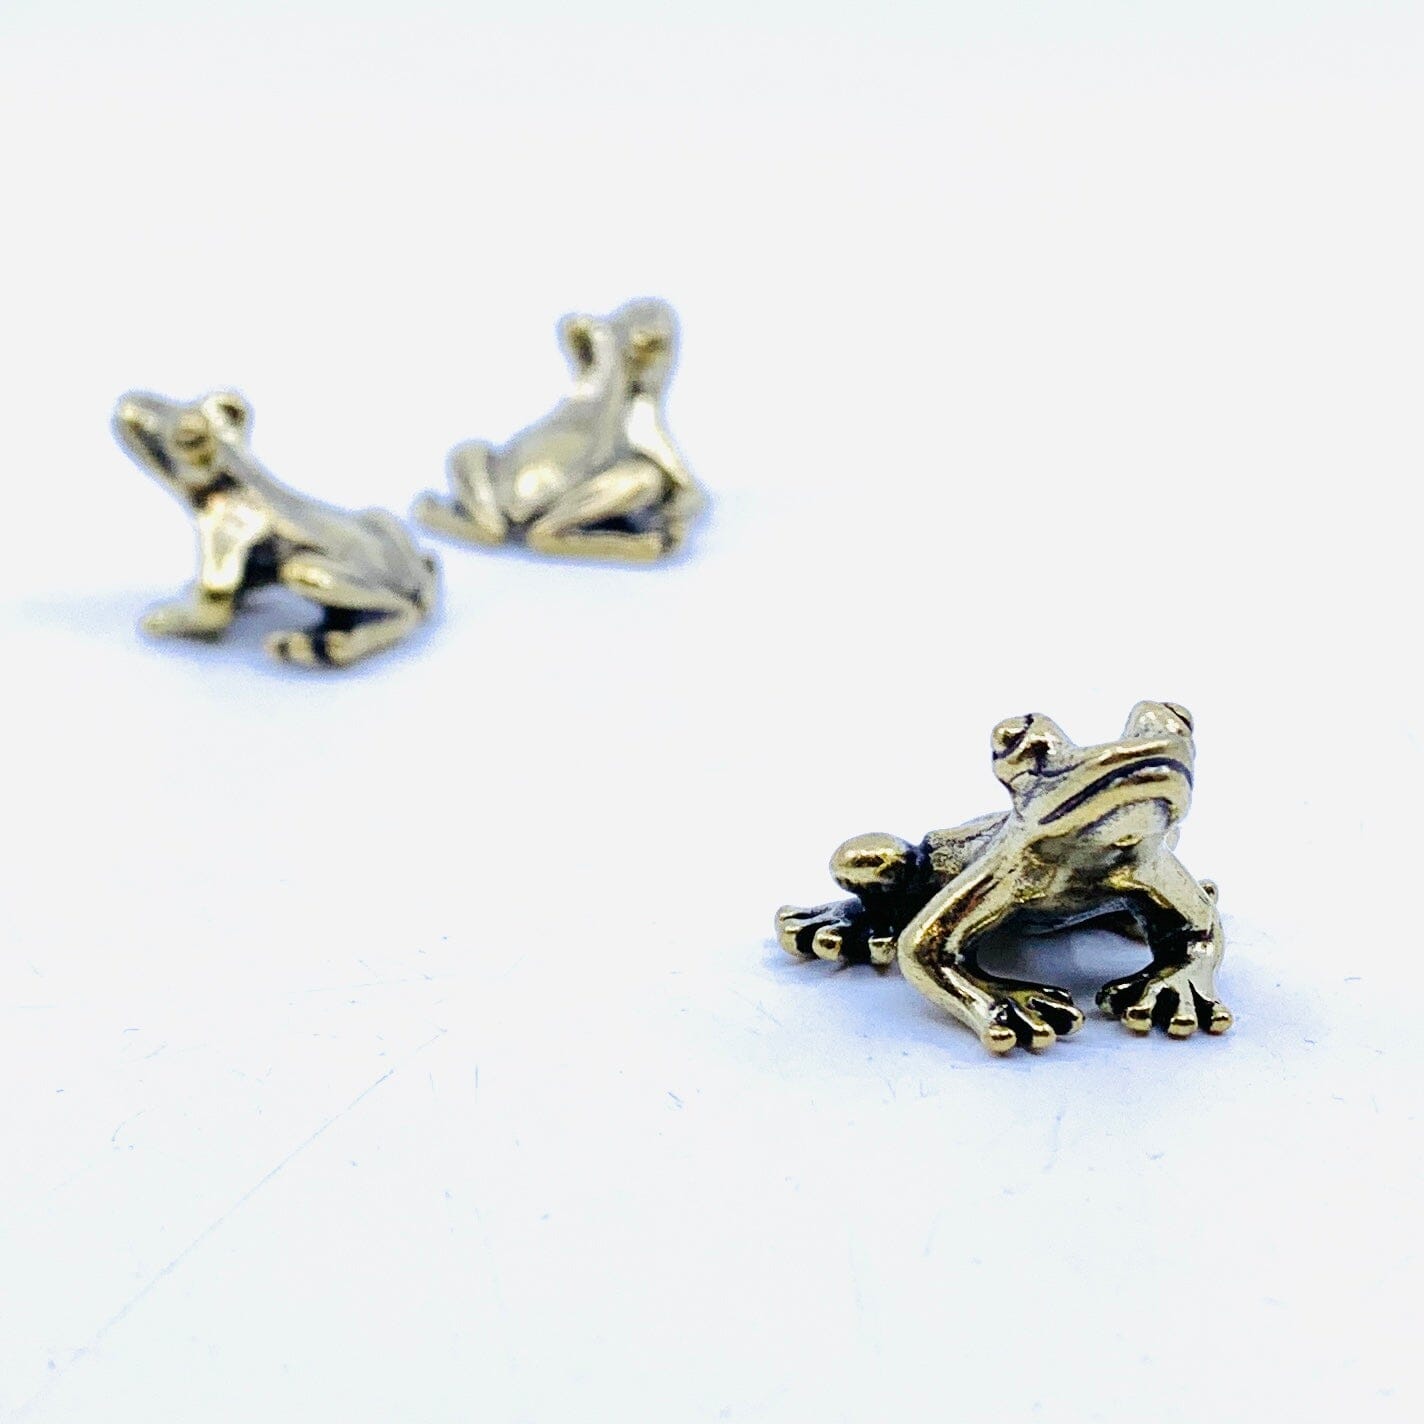 Miniature Brass Figurine, Frog Miniature - 